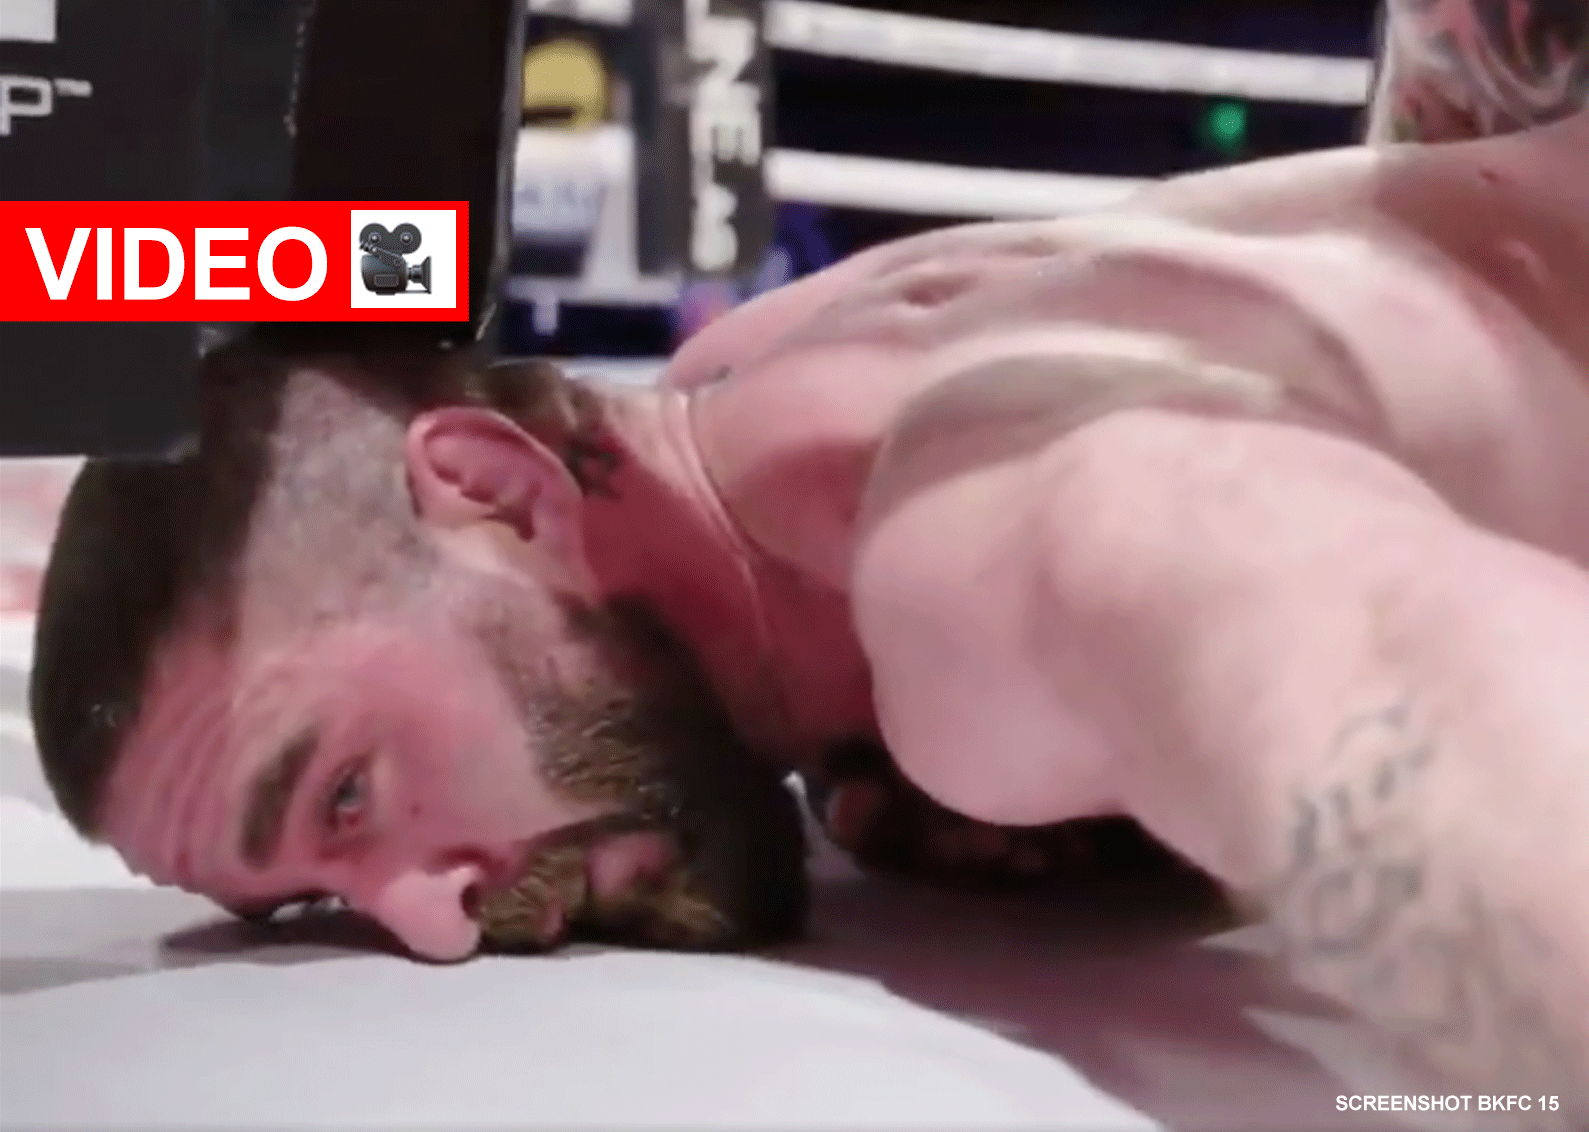 Barbaarse taferelen: Brute knock-outs tijdens Bare Knuckle boks event (video)